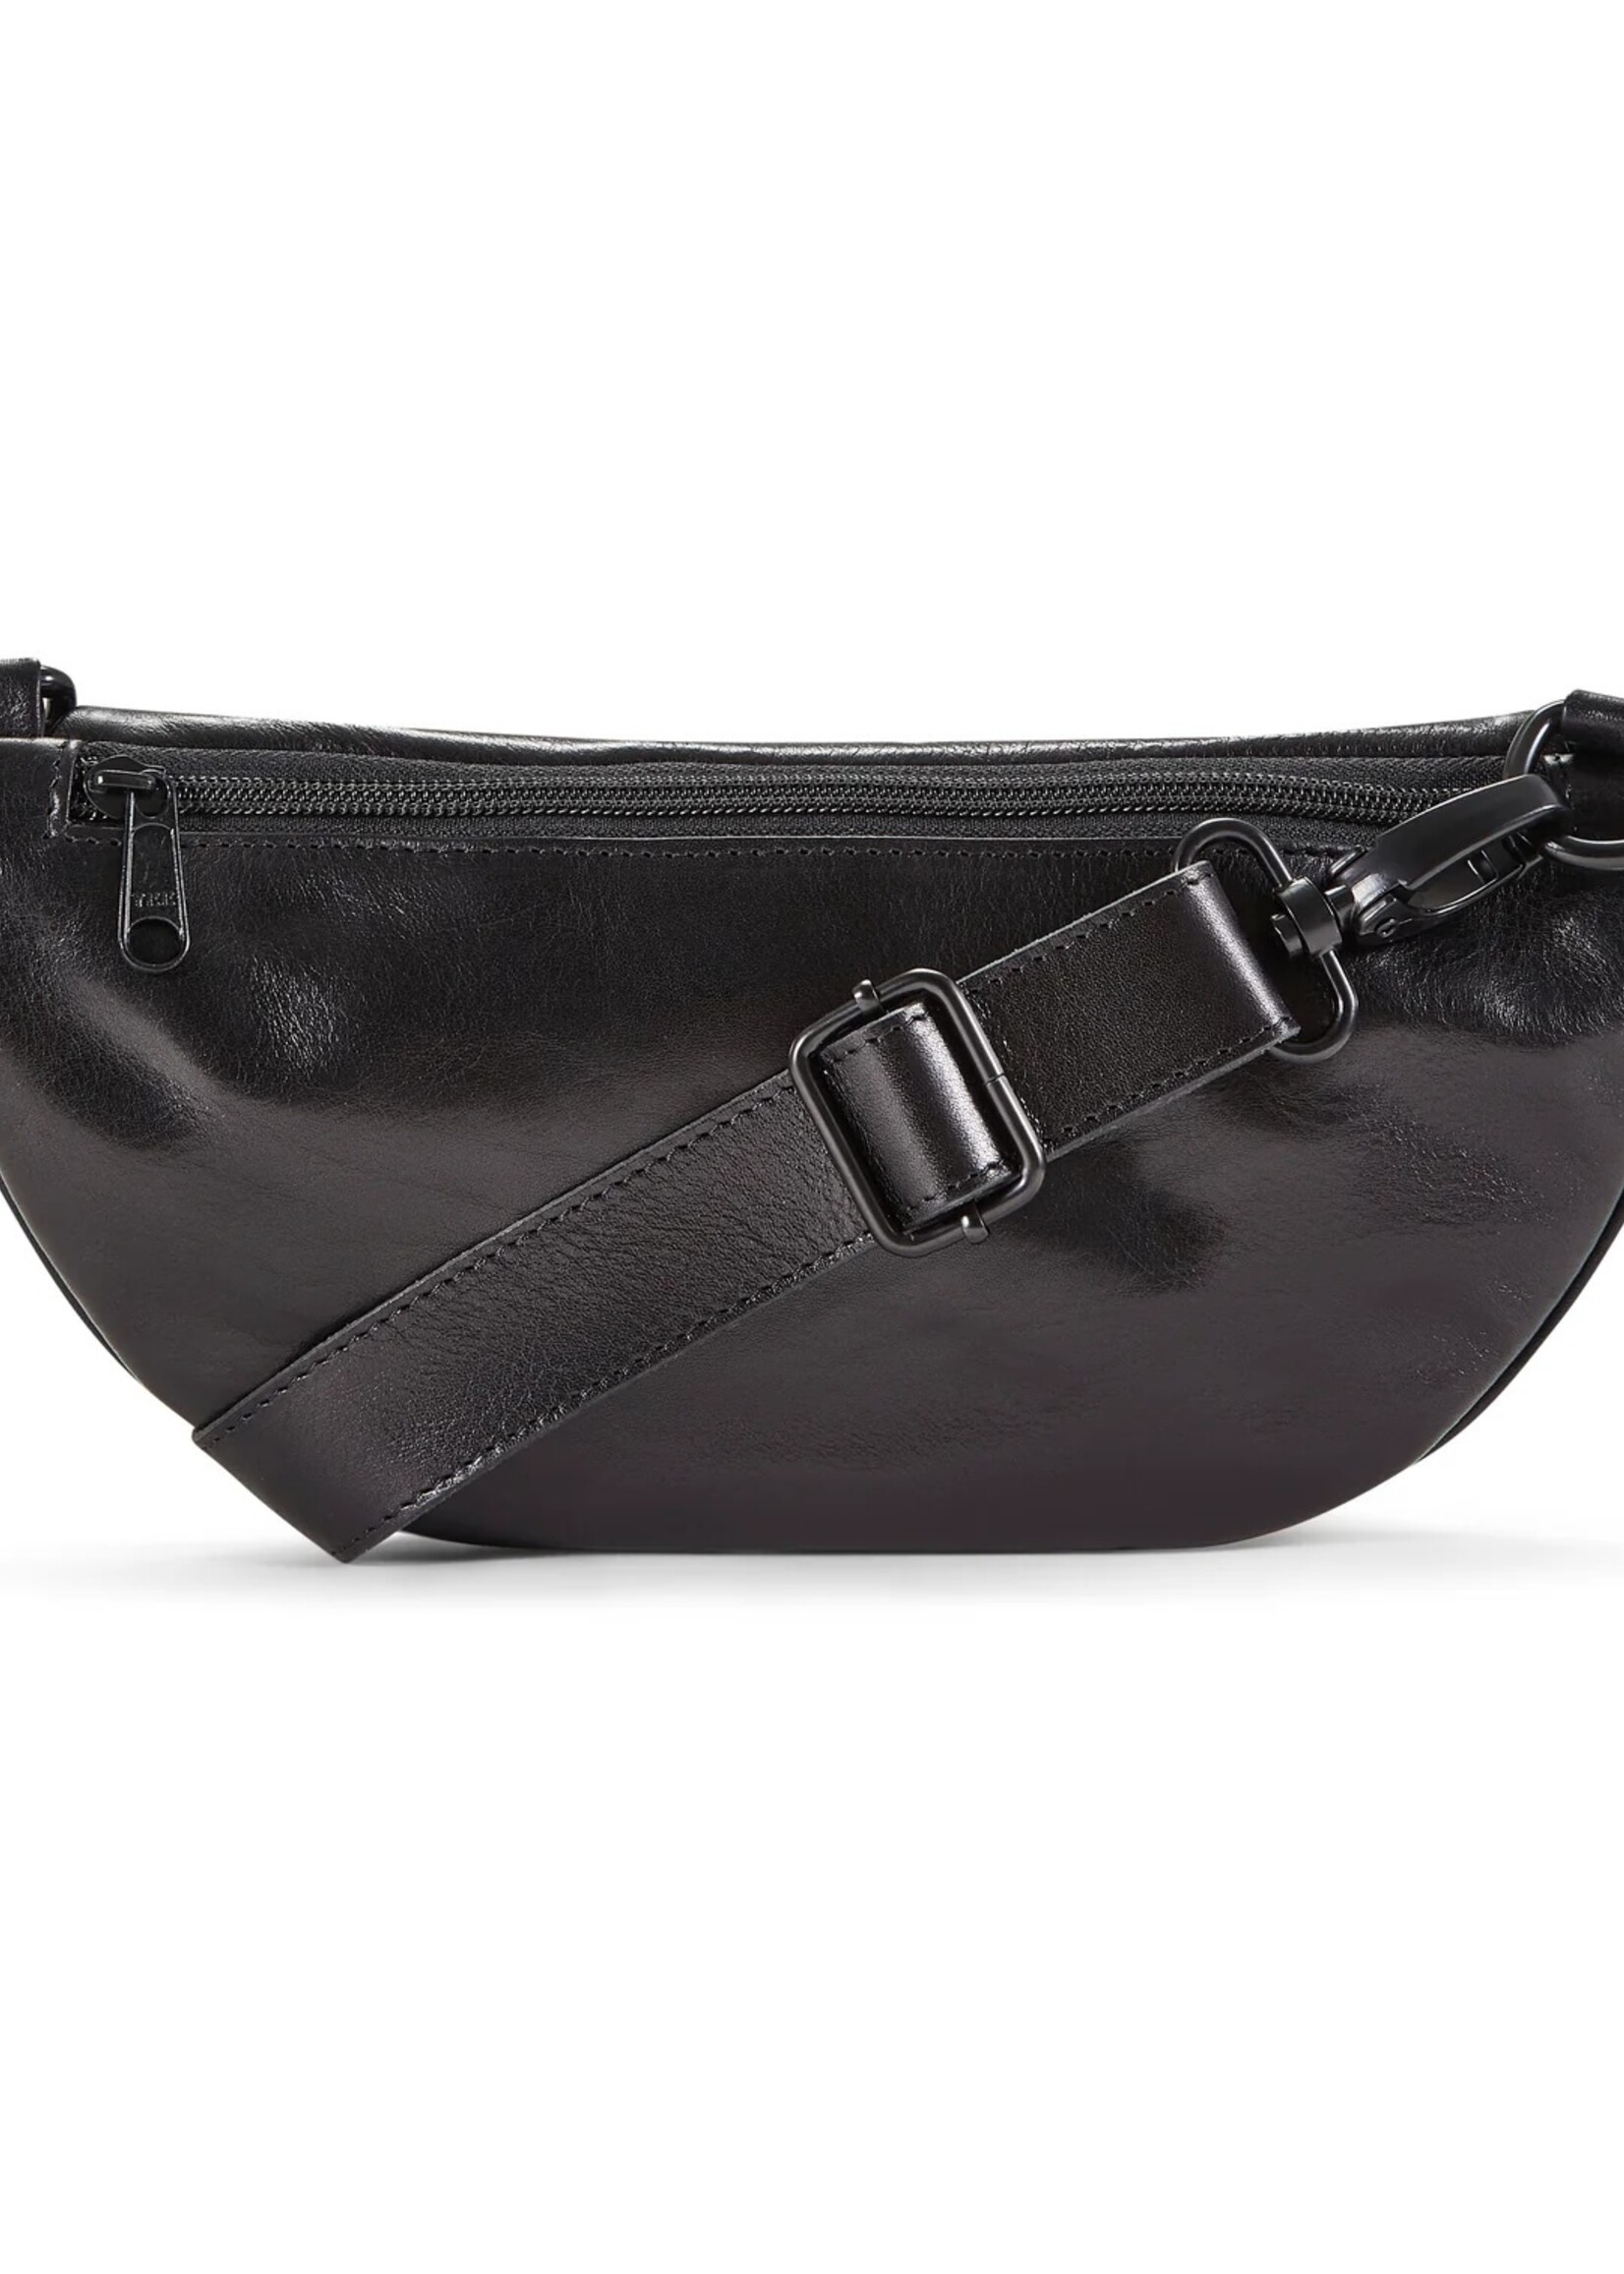 MARTINE ROSE Leather Bum Bag in Black